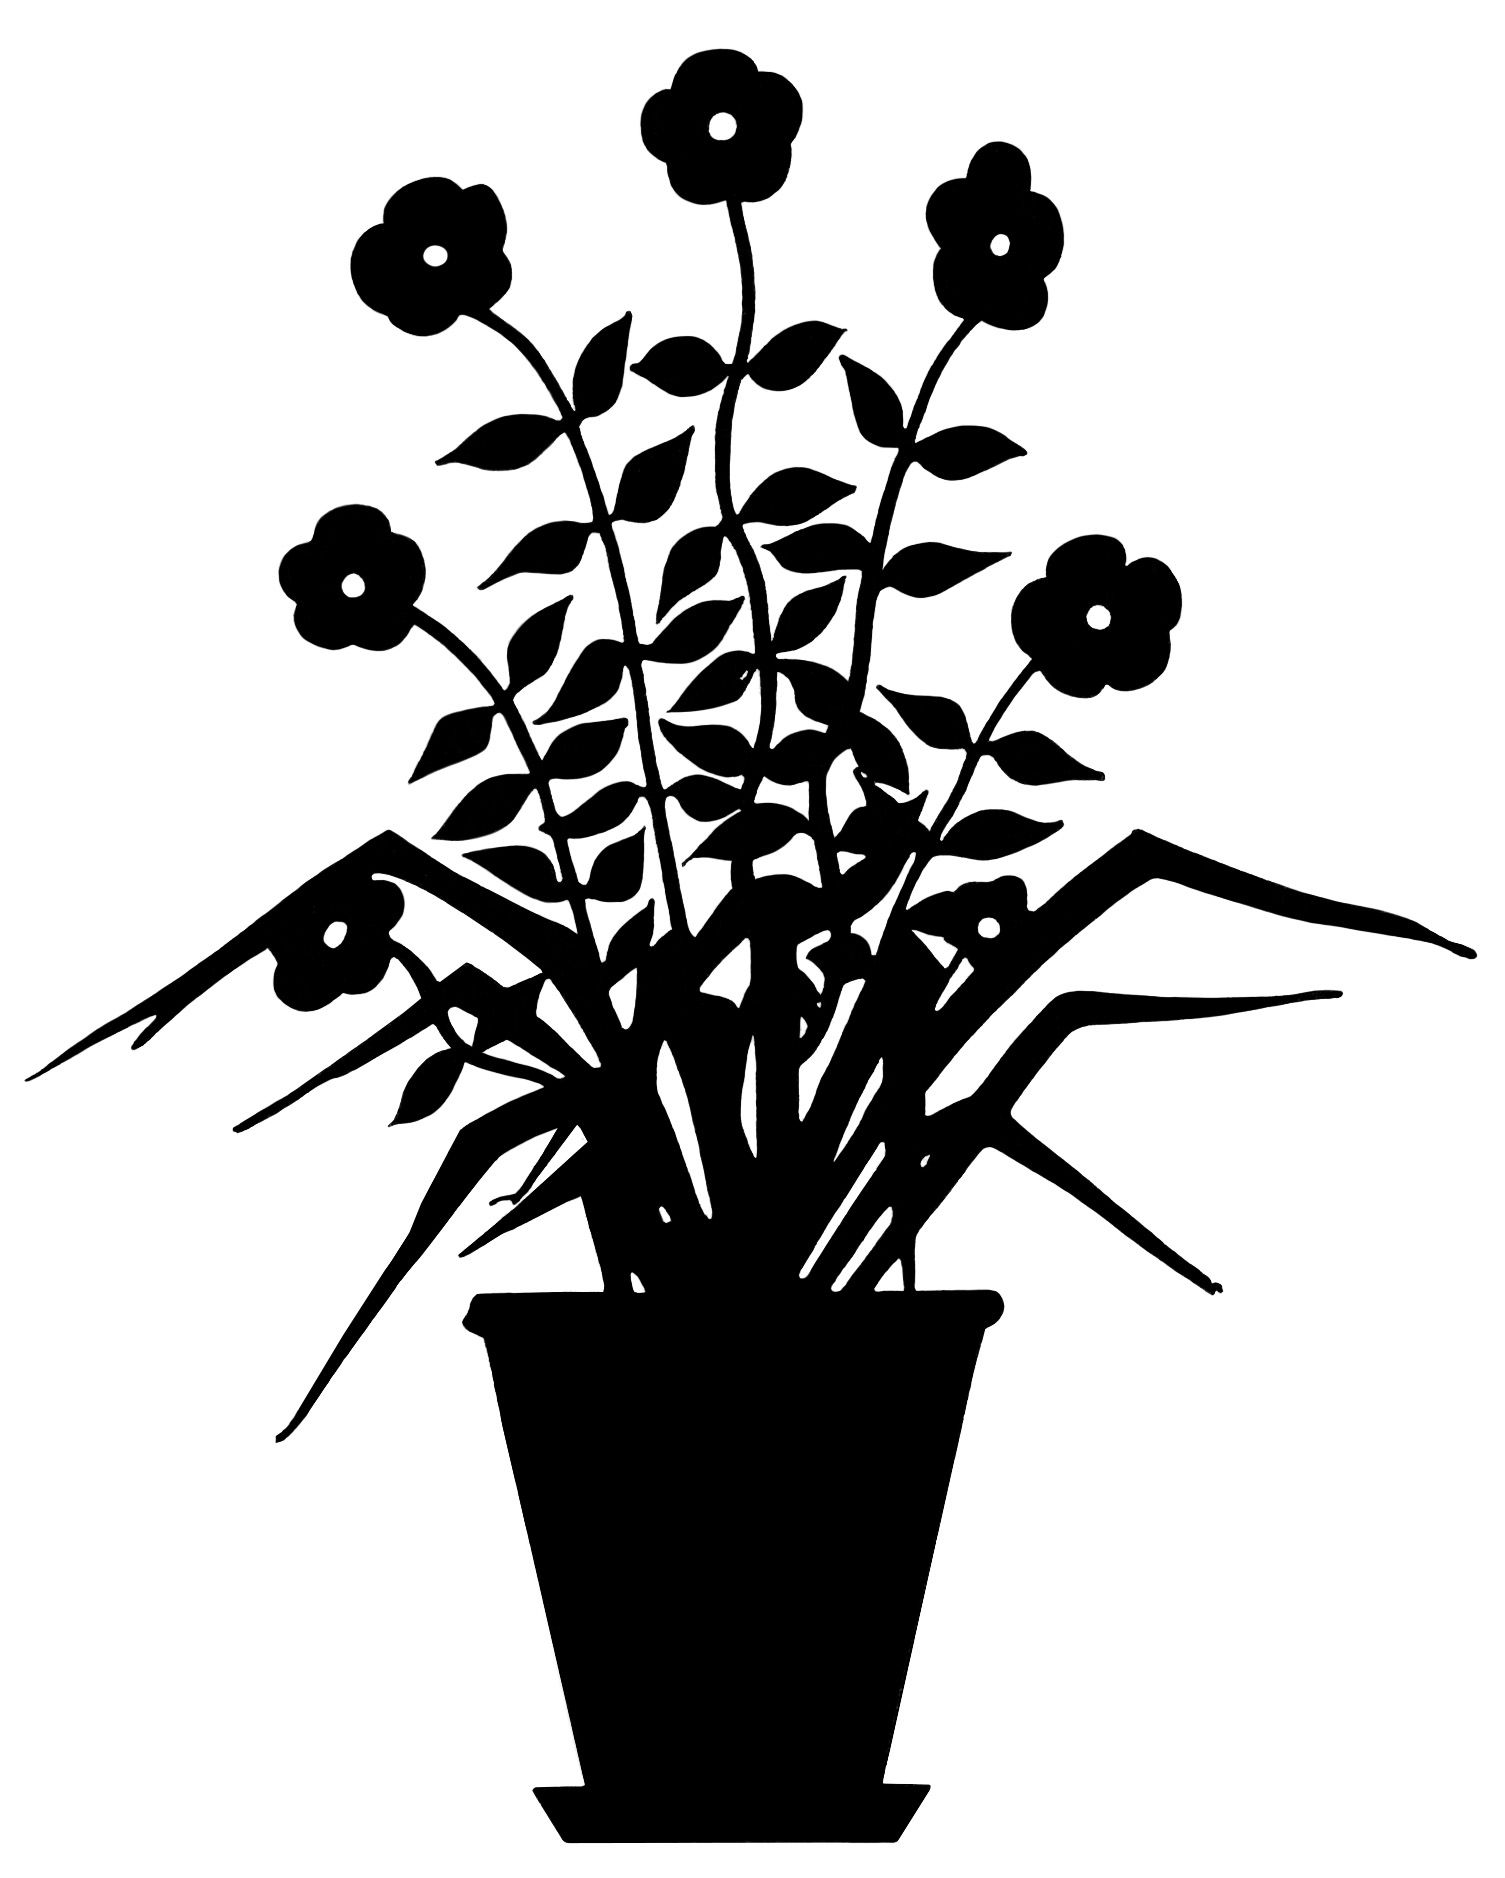 Vintage flower clip art, flowering plant silhouette, black